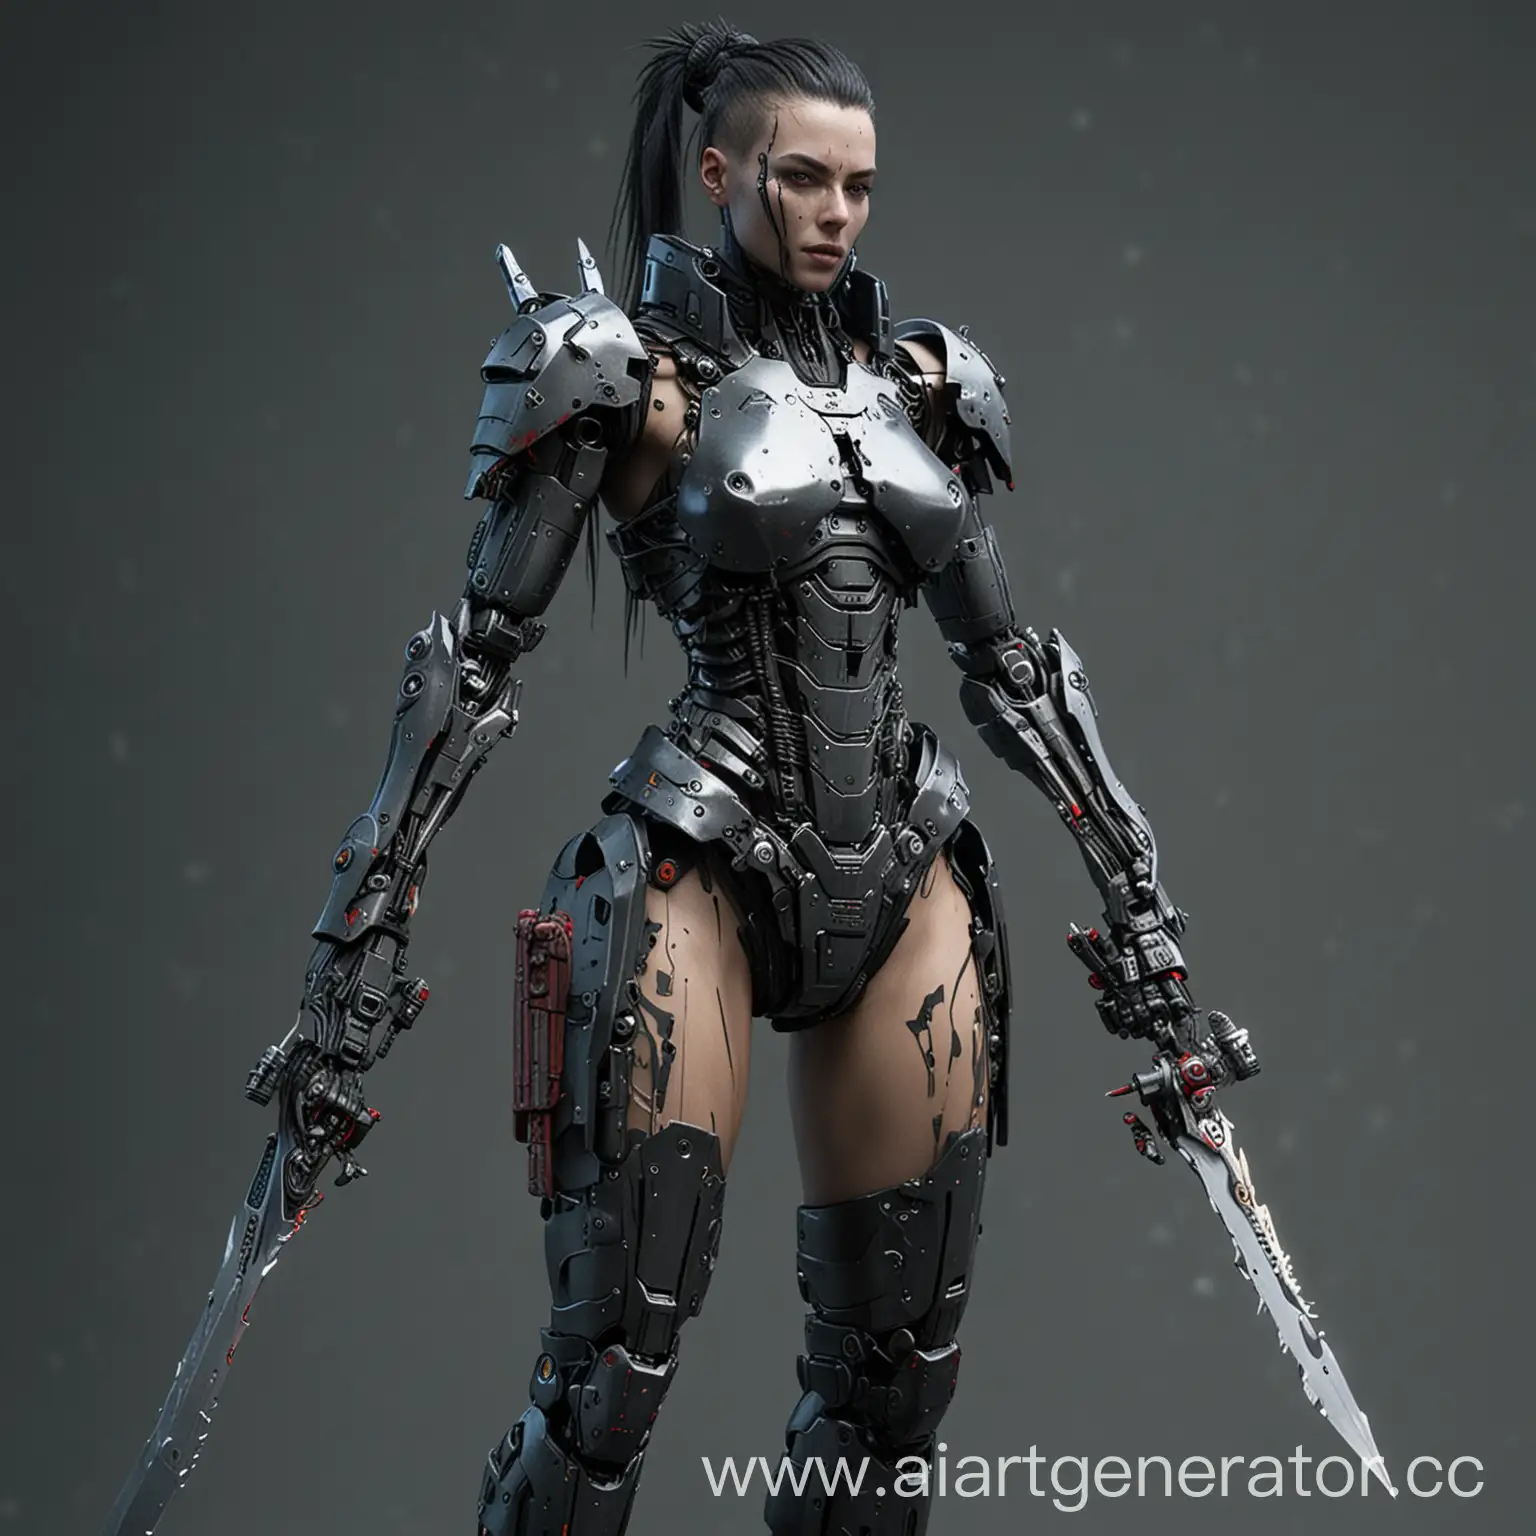 Futuristic-Cyberpunk-Robot-Warrior-with-DualBladed-Sword